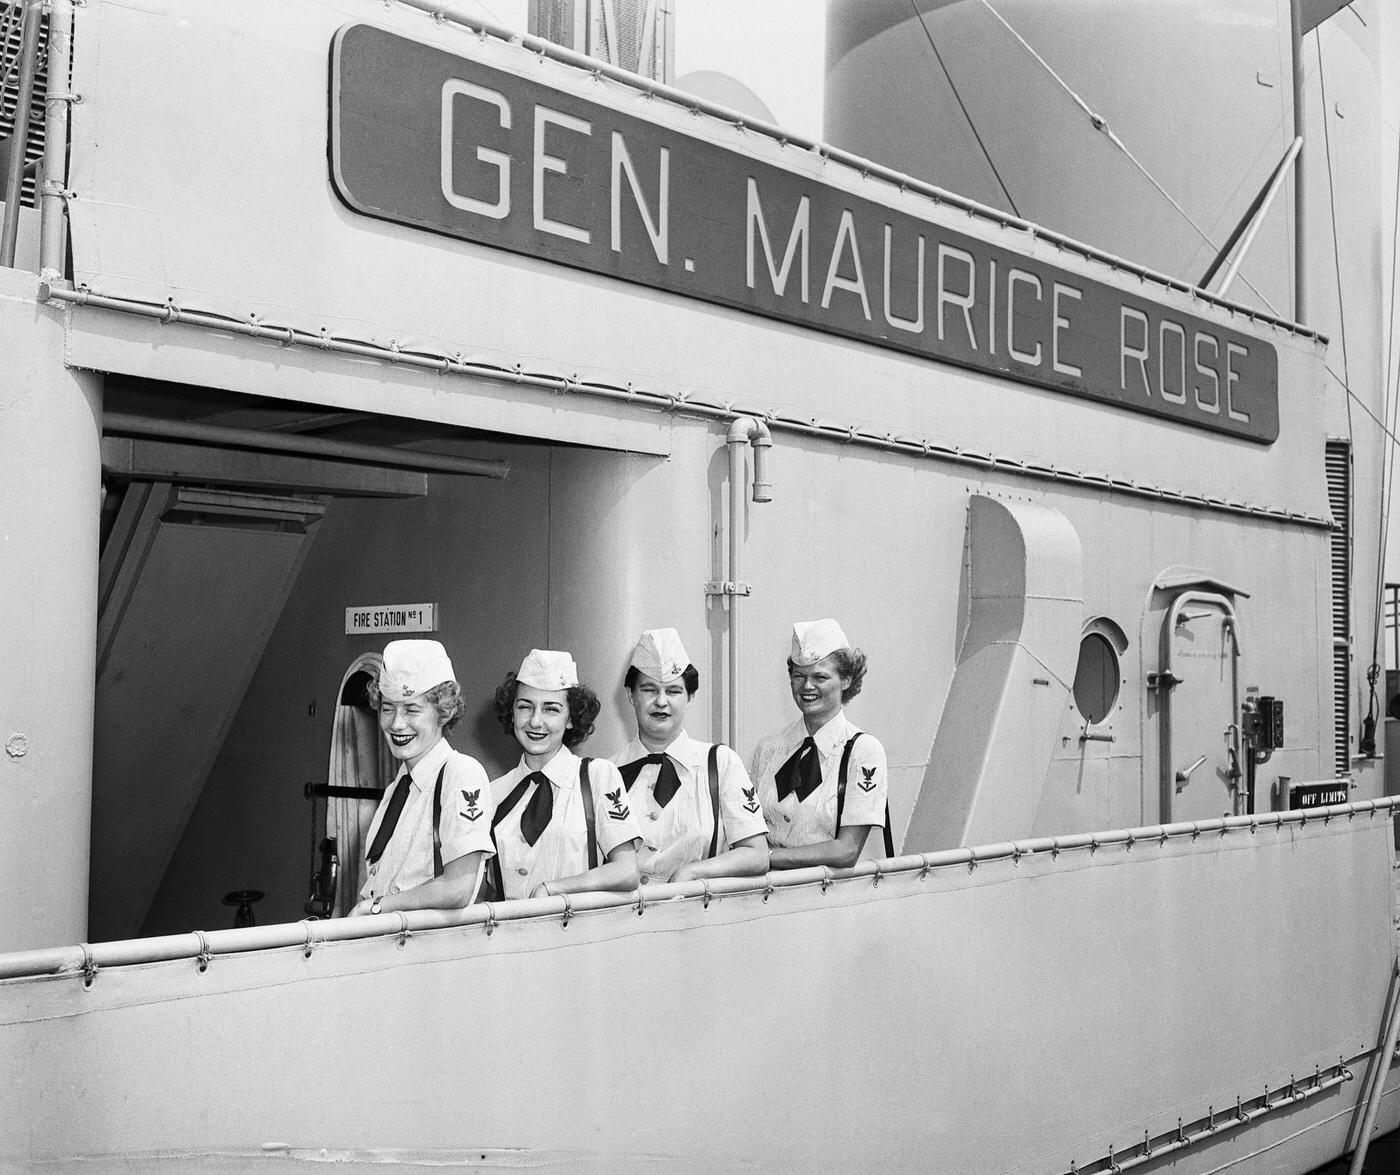 Enlisted Women Aboard The Usns General Maurice Rose Transport Ship.